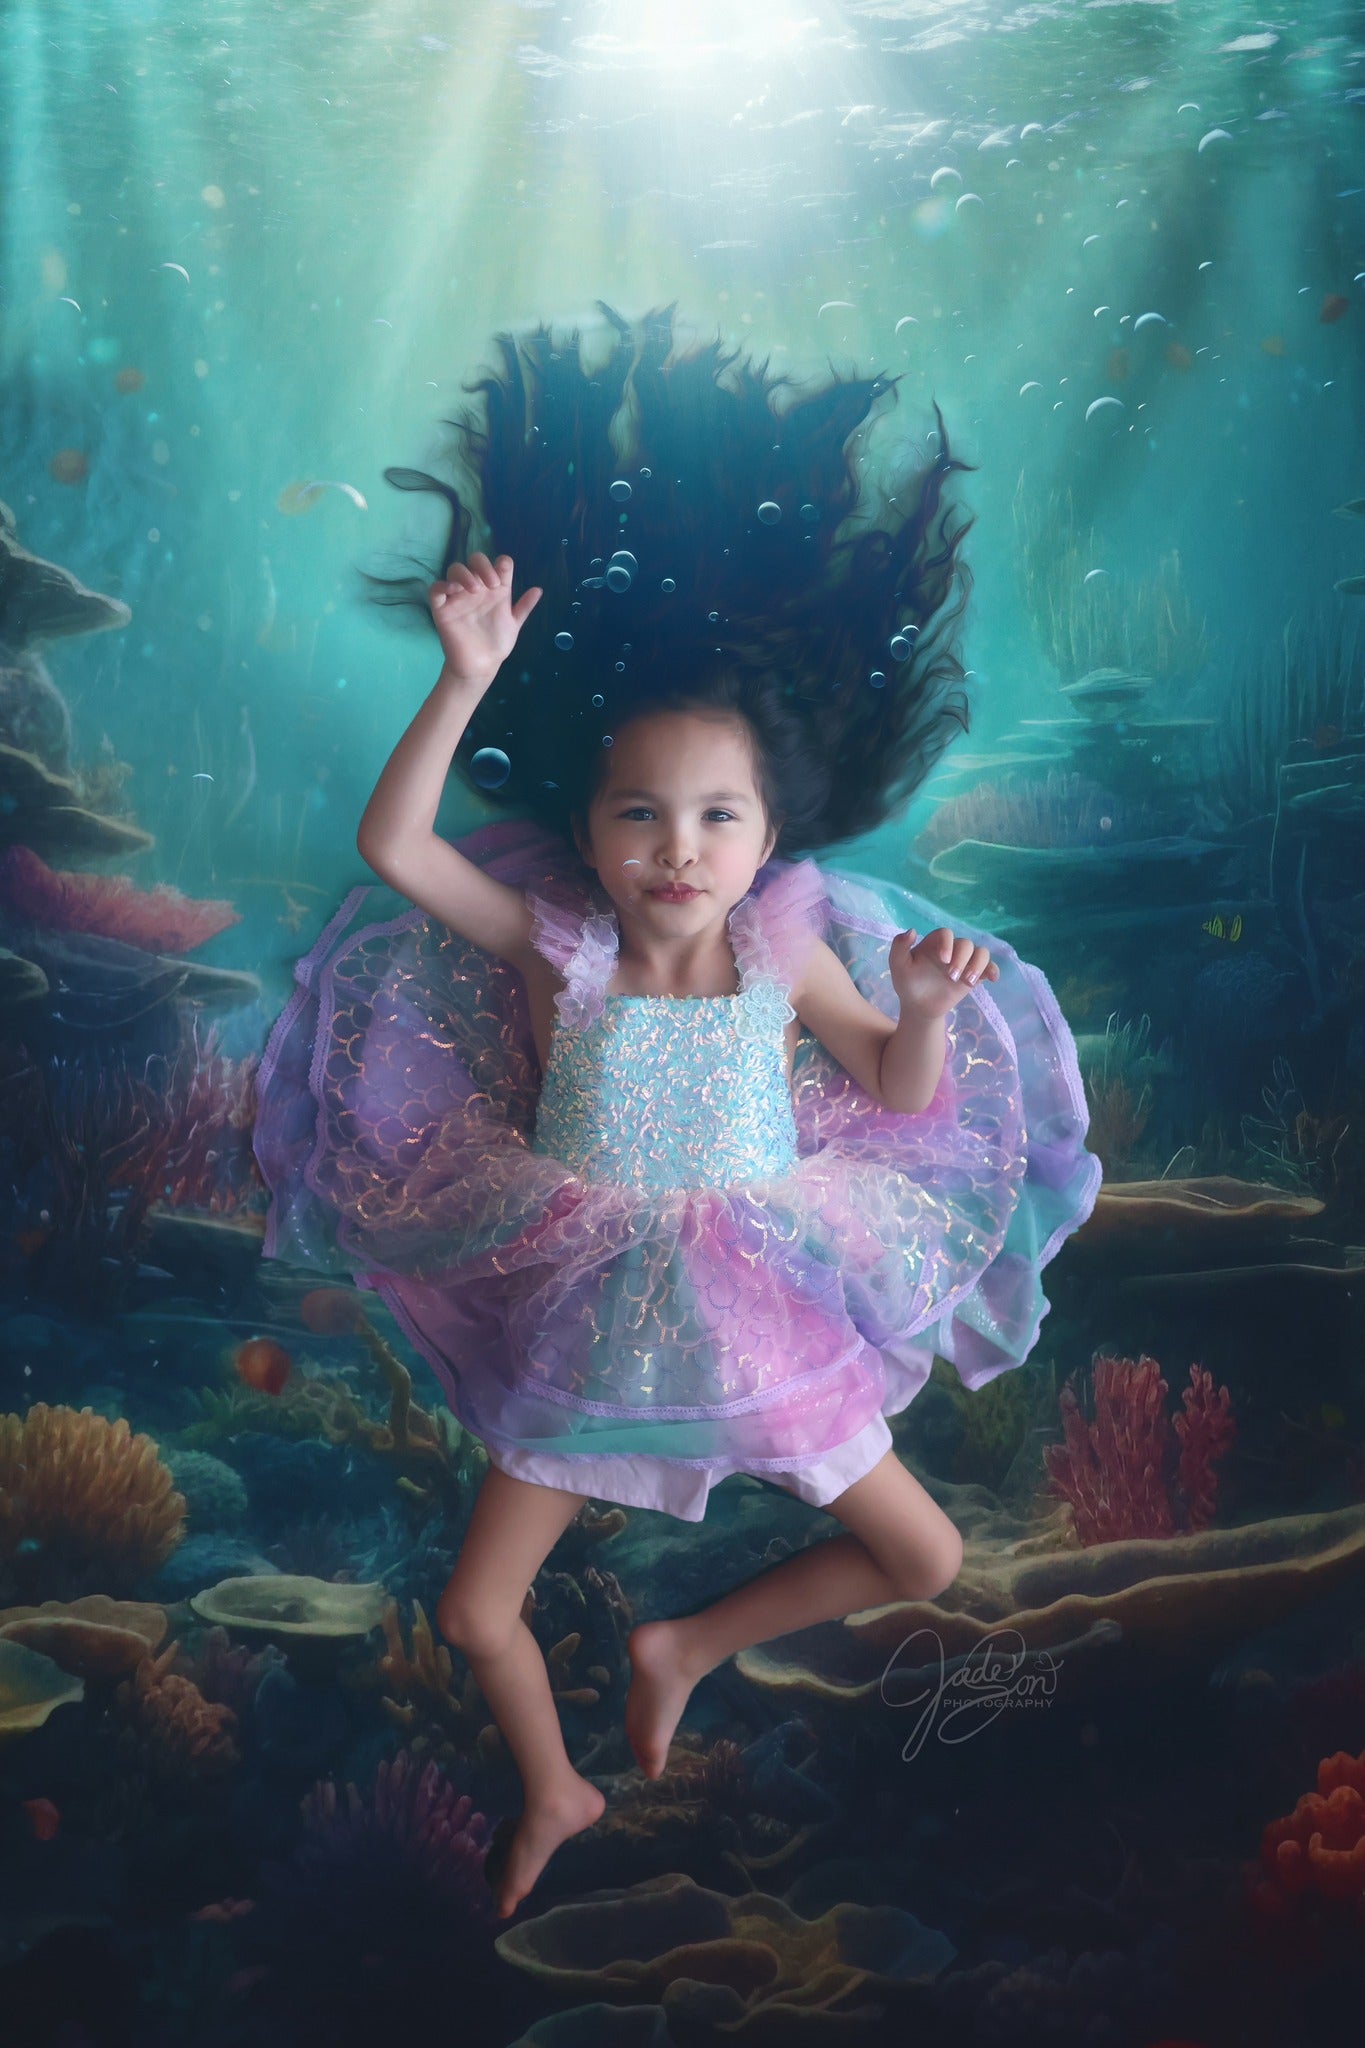 Kate Summer Underwater Ocean Backdrop Designed by Mandy Ringe Photography